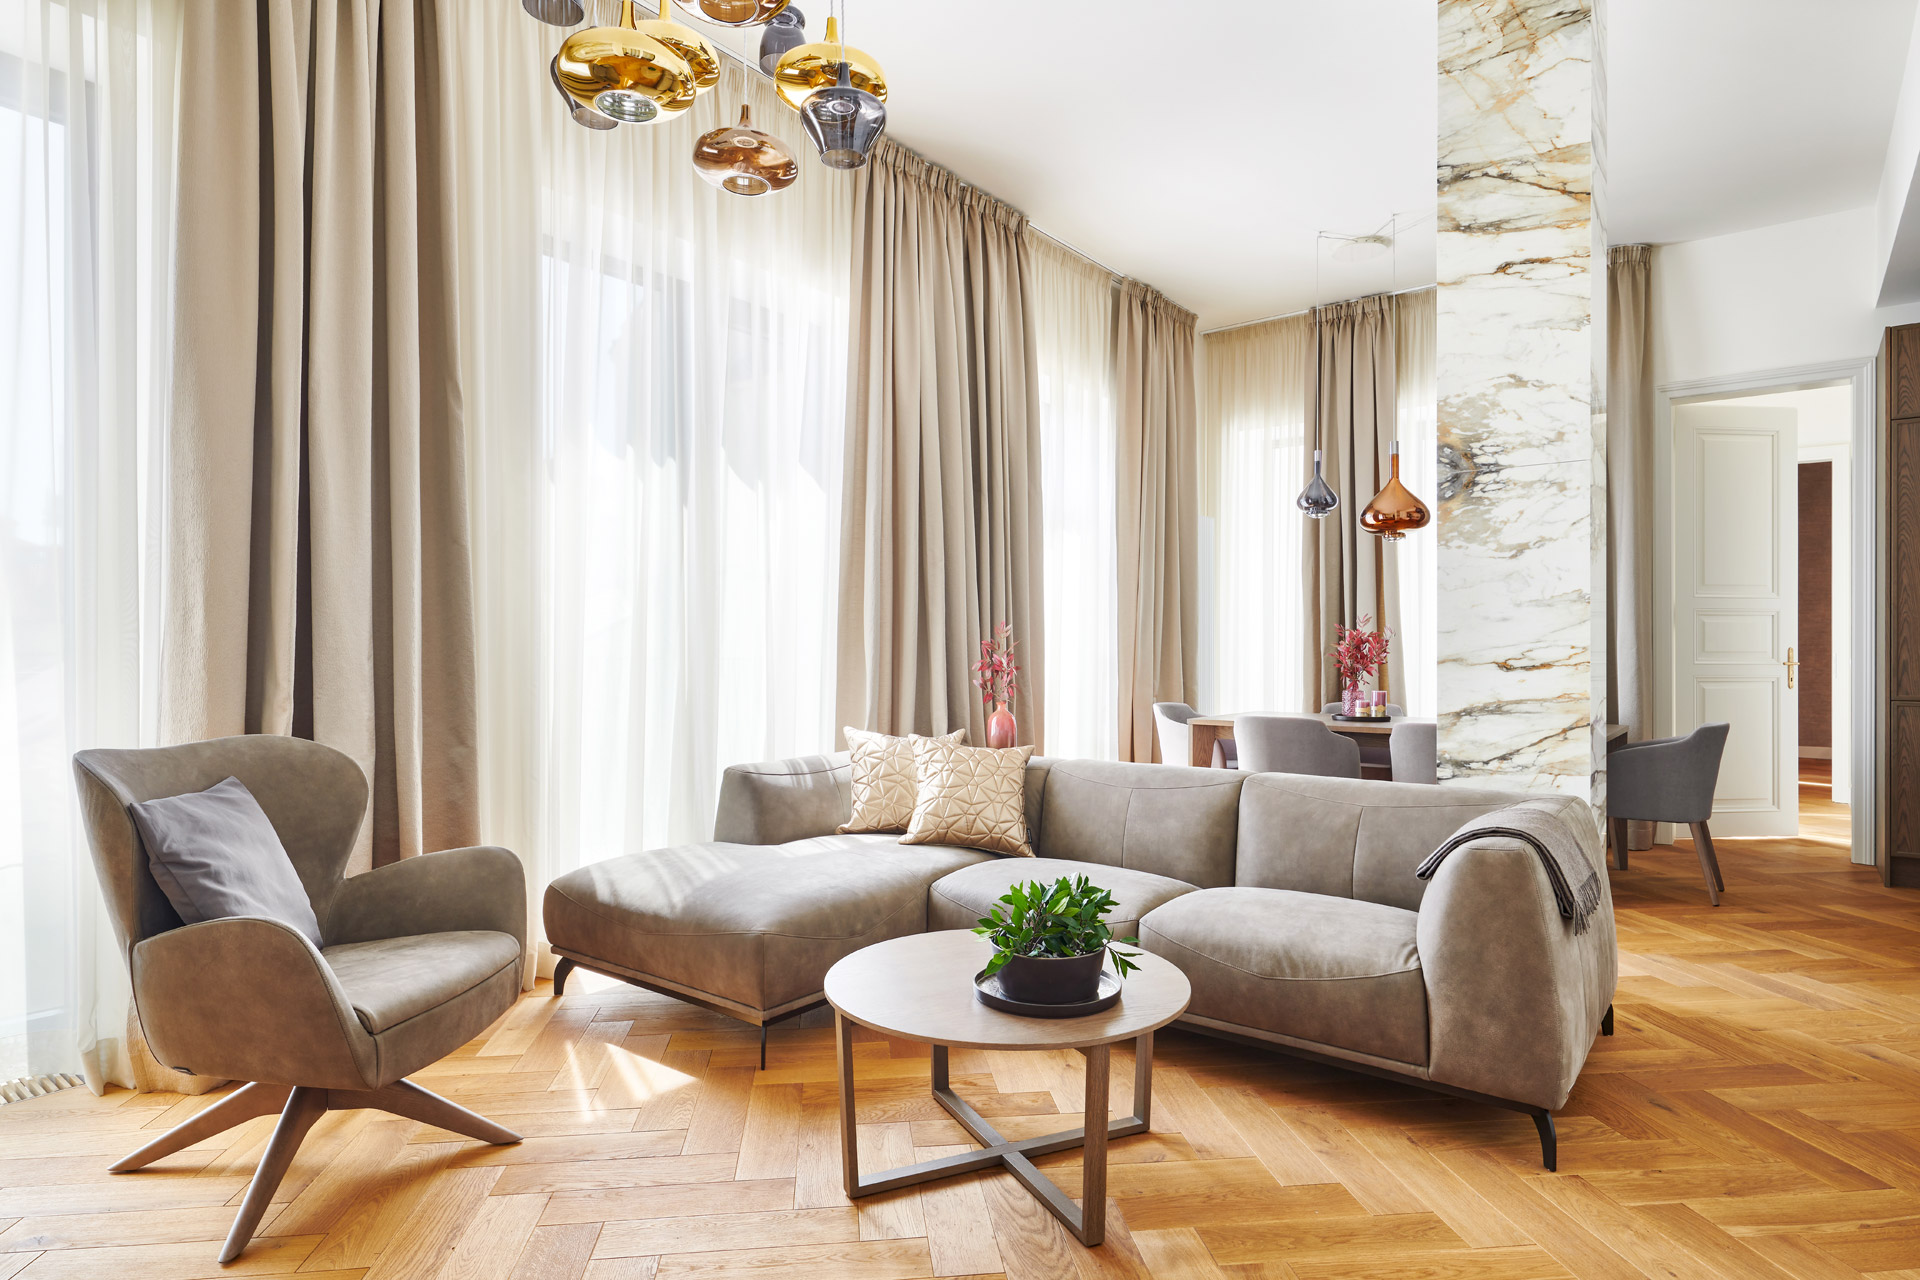 Hanák nábytek, dream living, complete interior